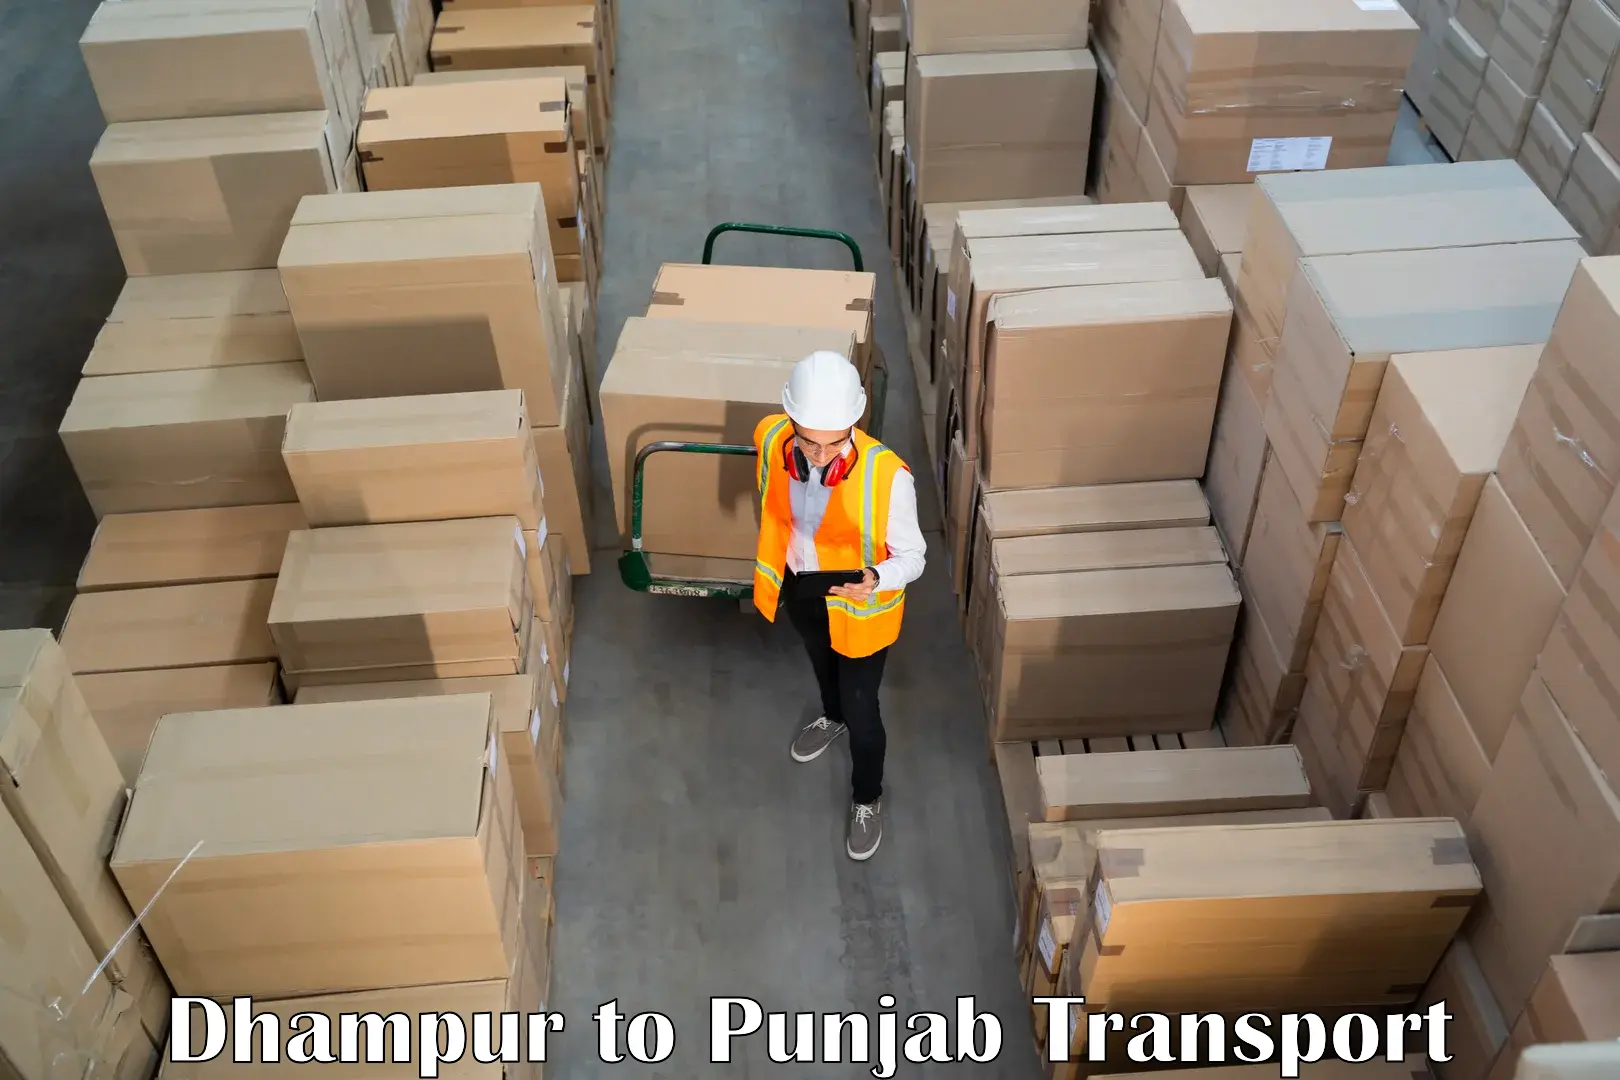 Commercial transport service Dhampur to Kotkapura